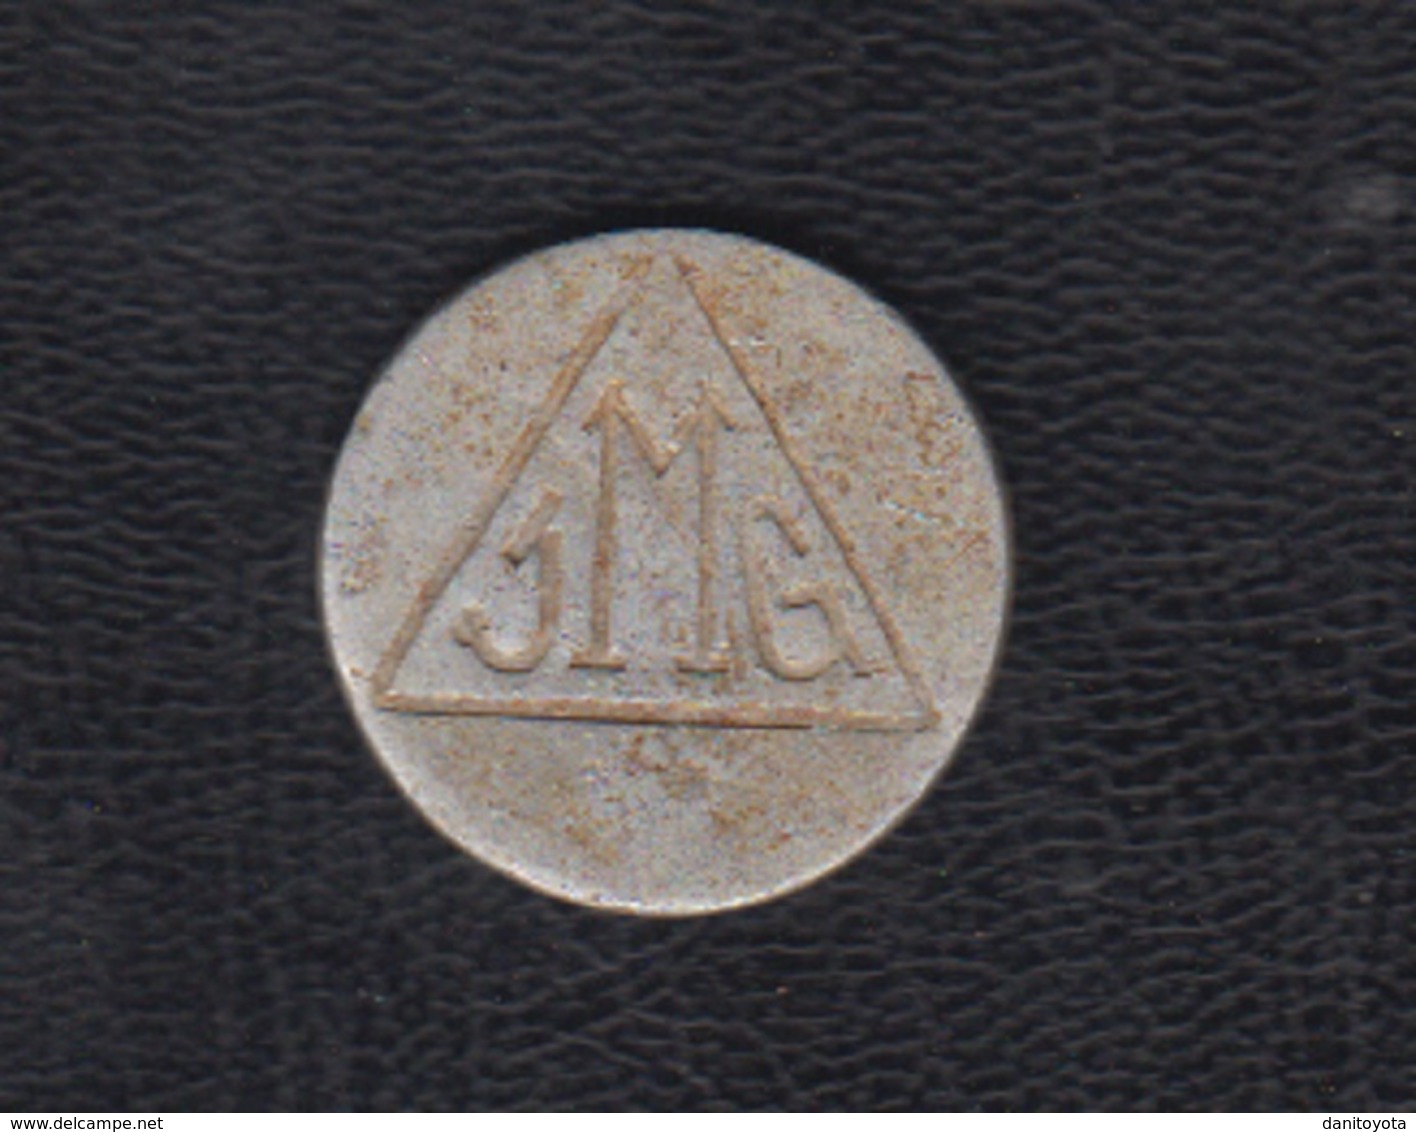 ISLA CRISTINA.  25 CENTIMOS JMG.  FABRICA SALAZONES -  Monedas De Necesidad